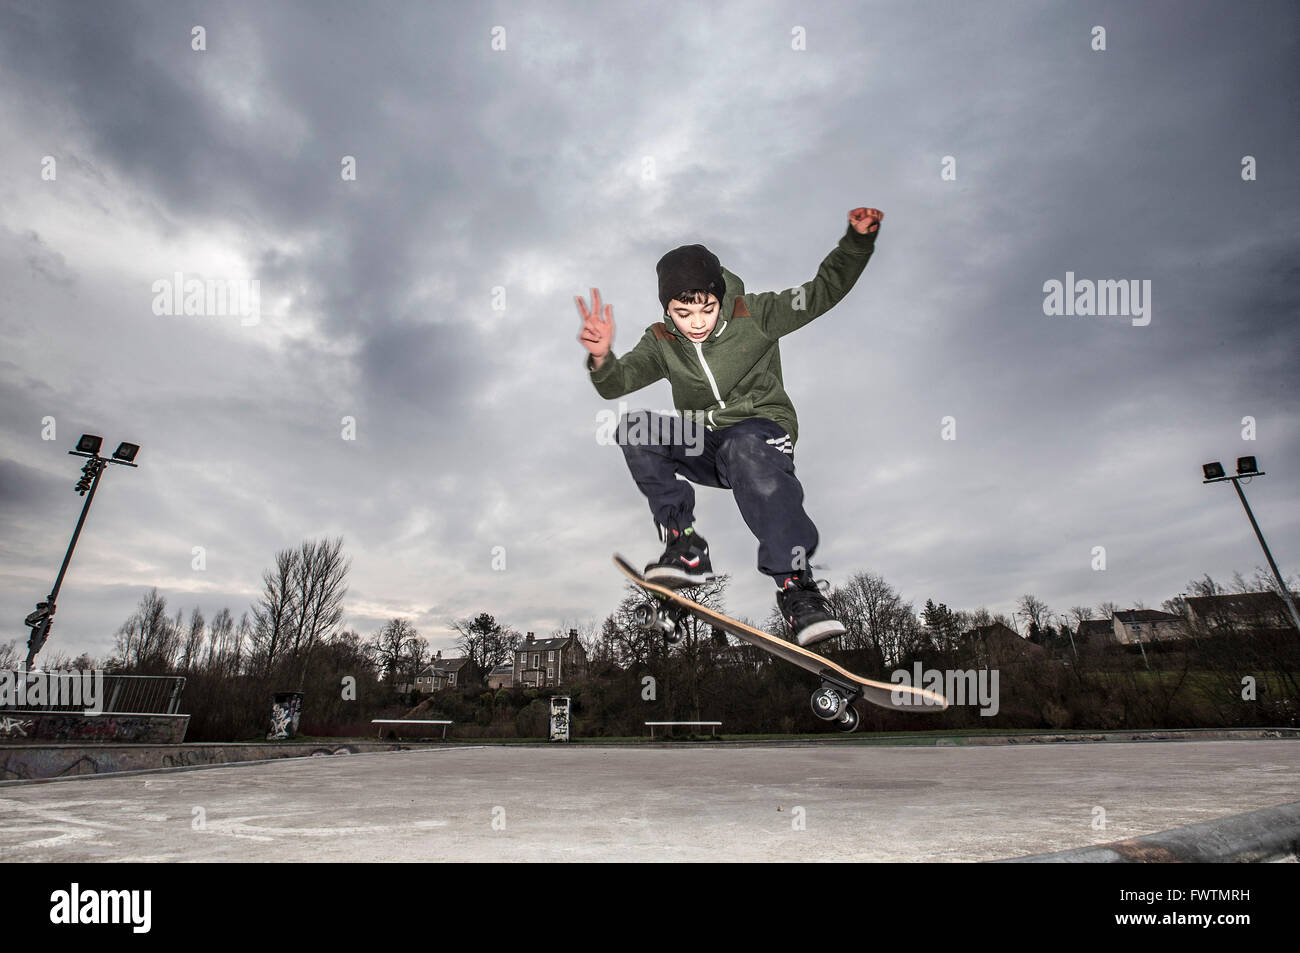 Boy skateboarding against stormy sky Stock Photo